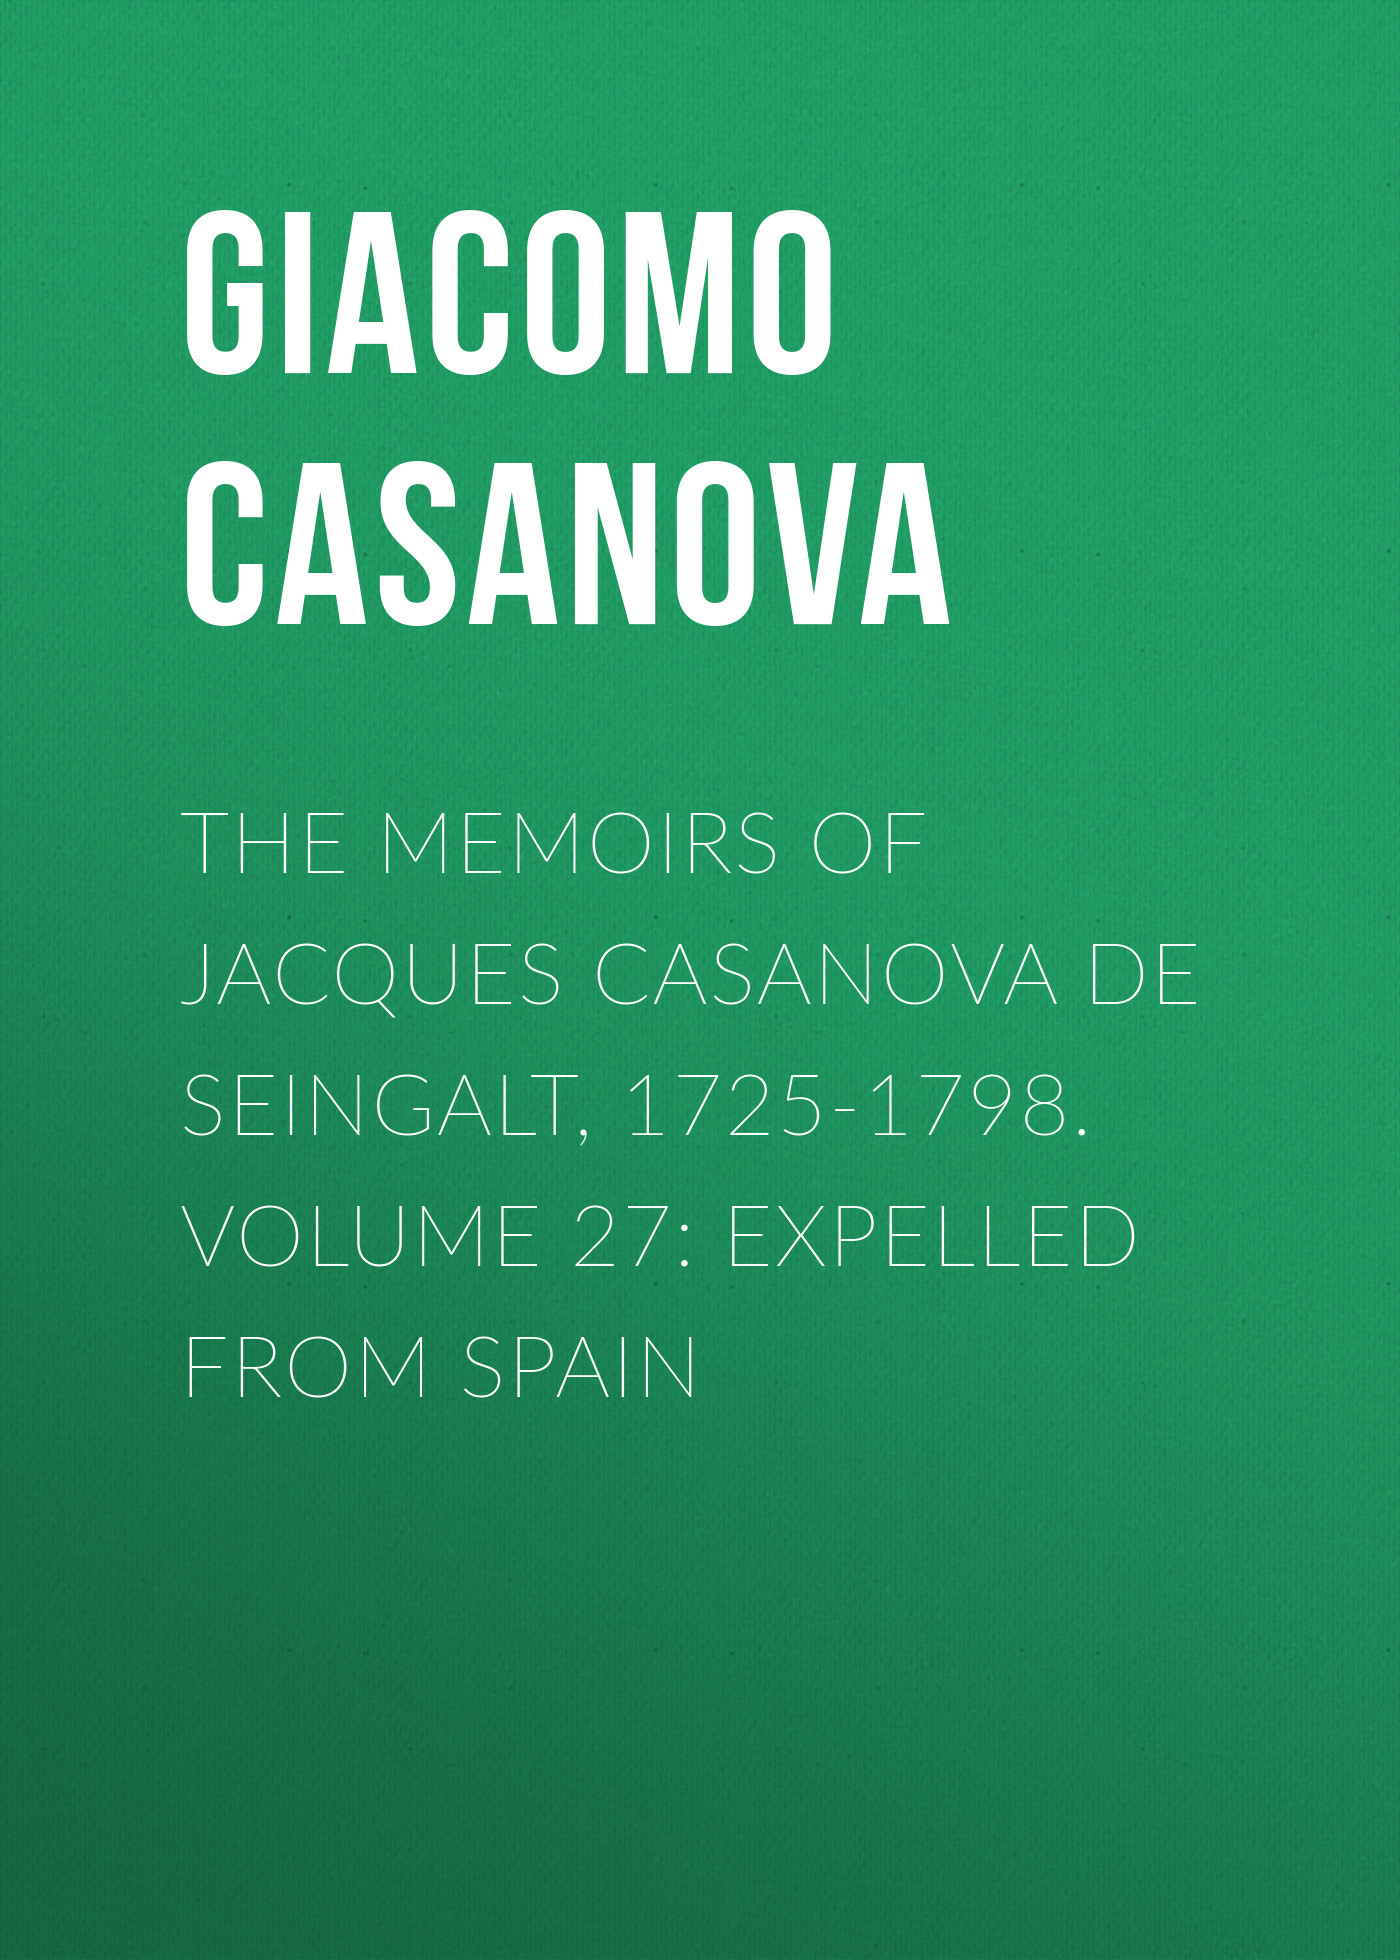 The Memoirs of Jacques Casanova de Seingalt, 1725-1798. Volume 27: Expelled from Spain